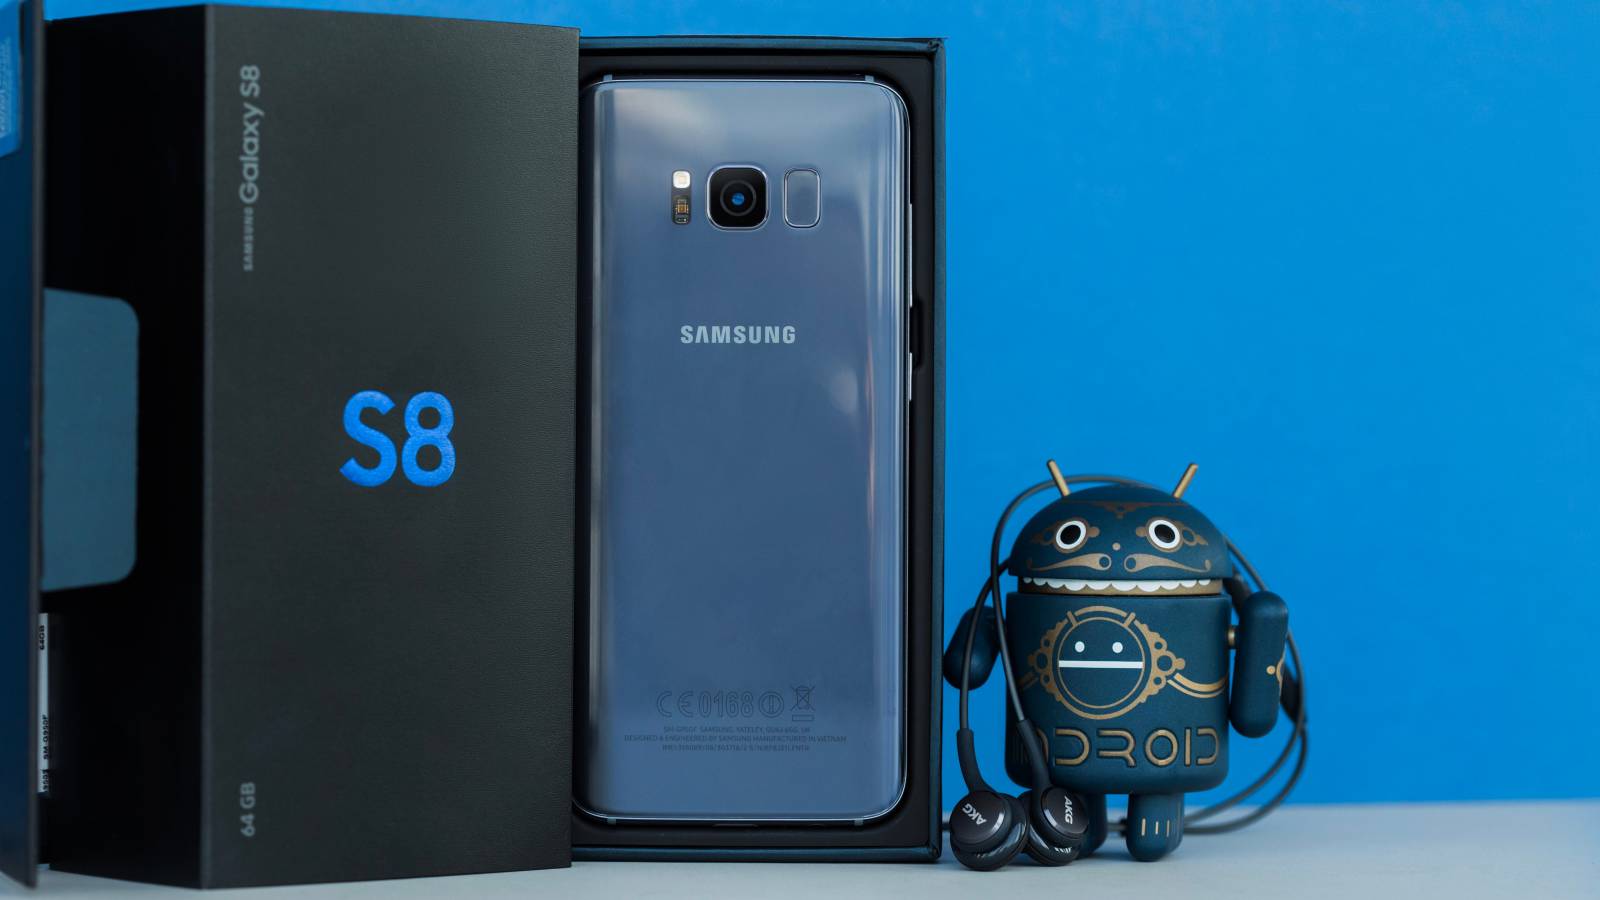 eMAG REDUCERI BUNE Samsung GALAXY S8 BLACK FRIDAY 2019